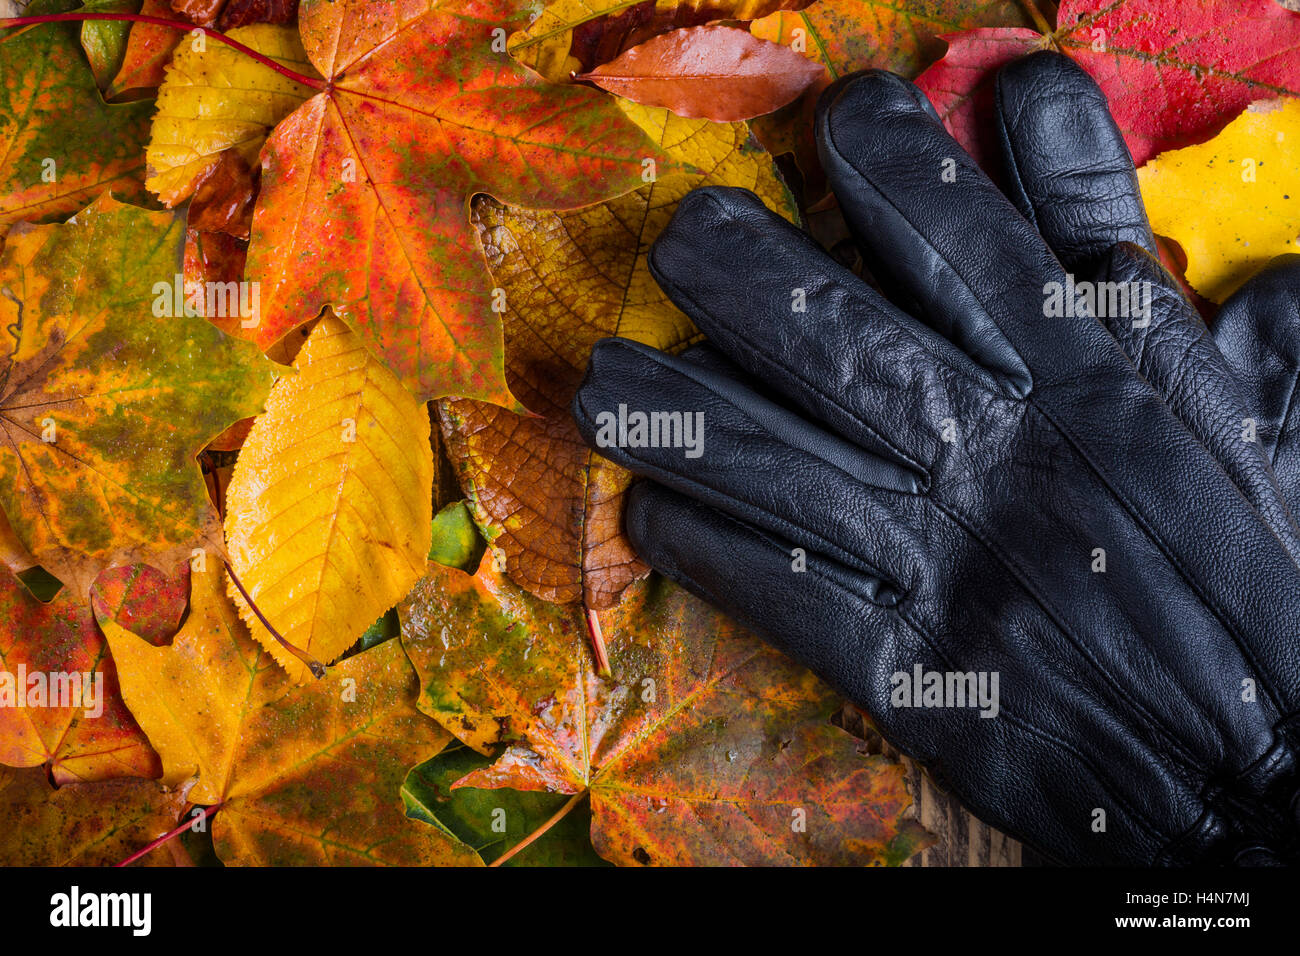 schwarze Lederhandschuhe in bunten nass lässt Schlechtwetter Herbst Herbst Konzept Stockfoto